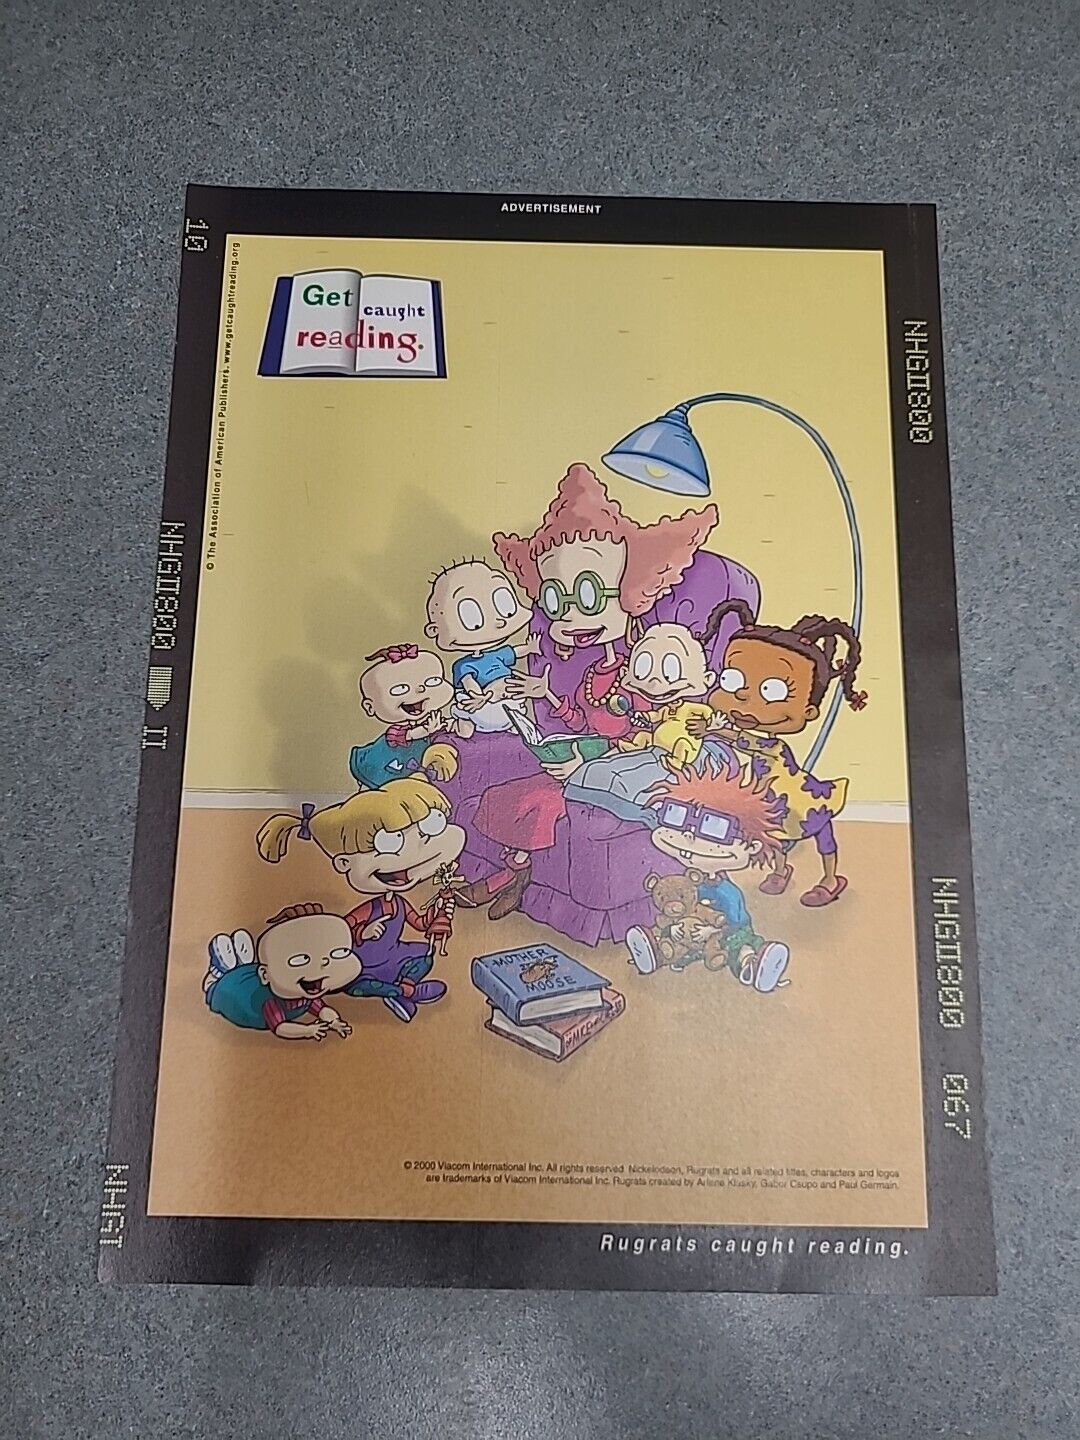 Rugrats Get Caught Reading Nickelodeon Print Ad 2000 8x11 Wall Art Decor 